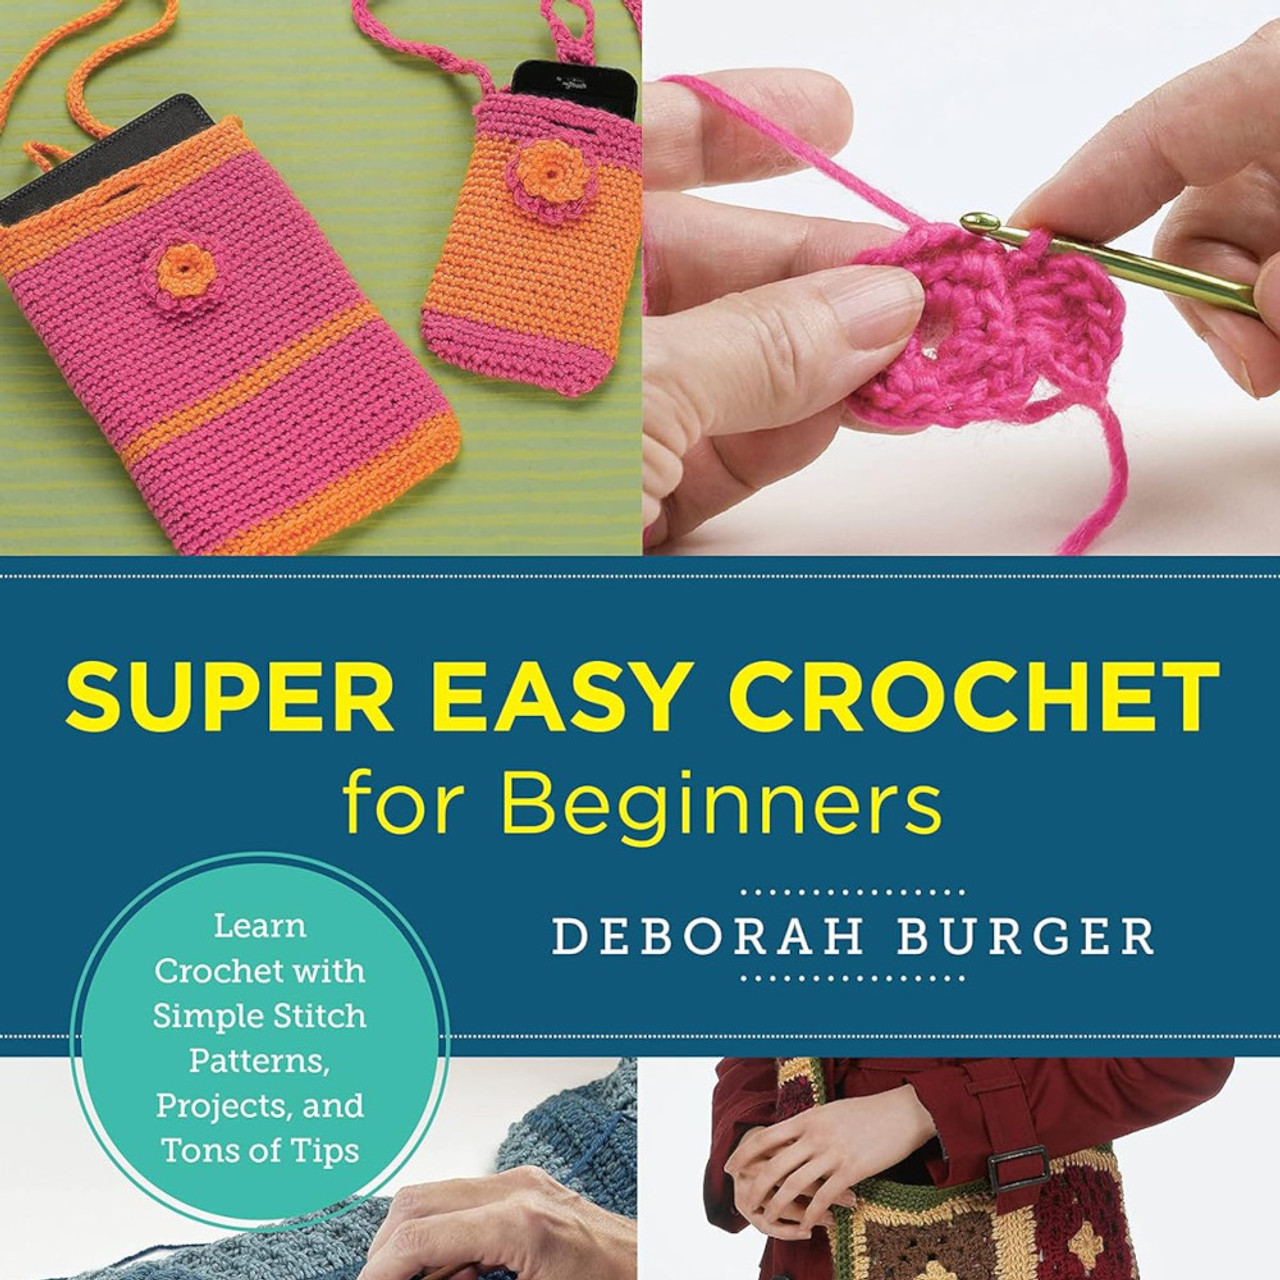 Easy & Modern Punch Needle Kits for Beginners - Easy Crochet Patterns